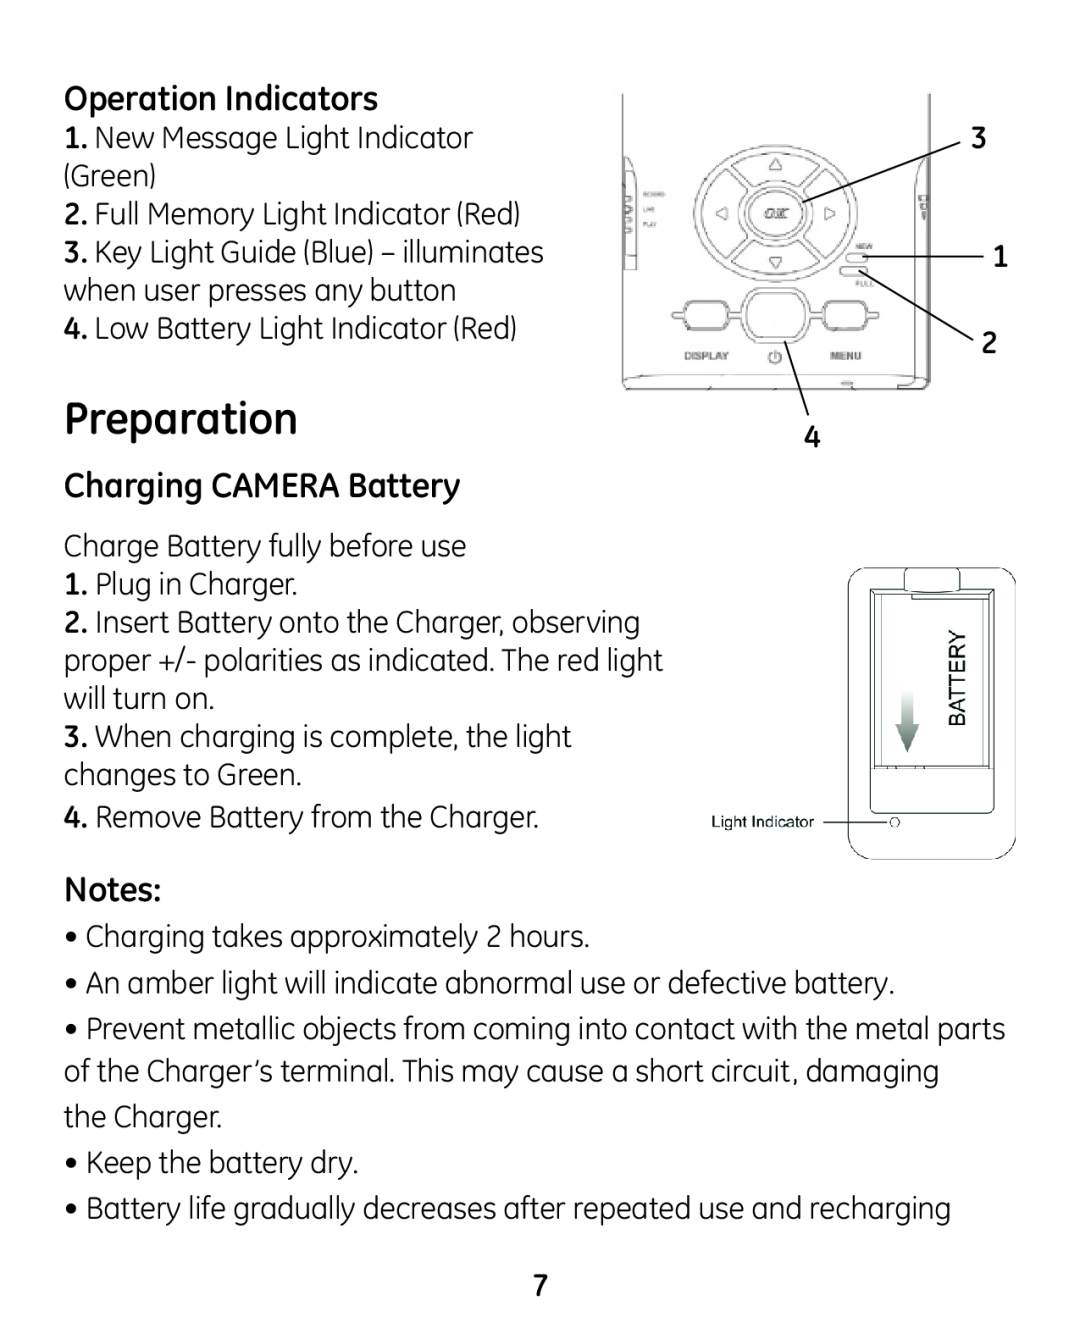 GE 45227-1 manual Preparation, Operation Indicators, Charging CAMERA Battery 